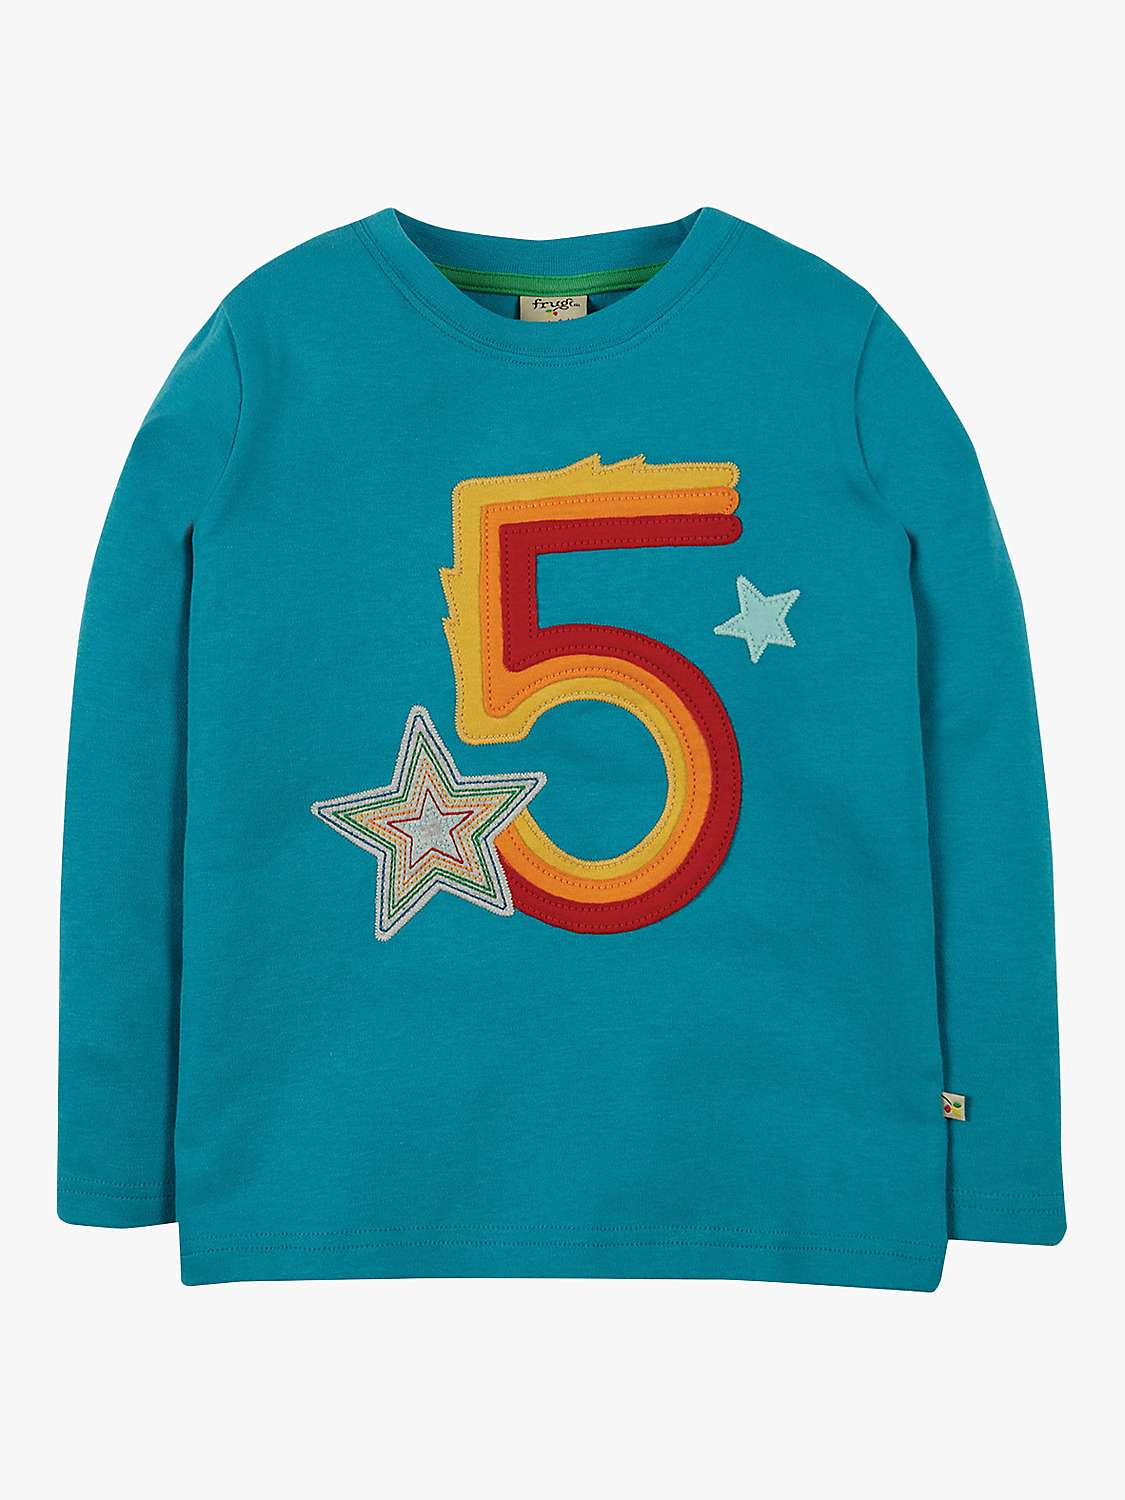 Buy Frugi Kids' Magic Number 5 Organic Cotton Star T-shirt, Tobermory Teal/Multi Online at johnlewis.com